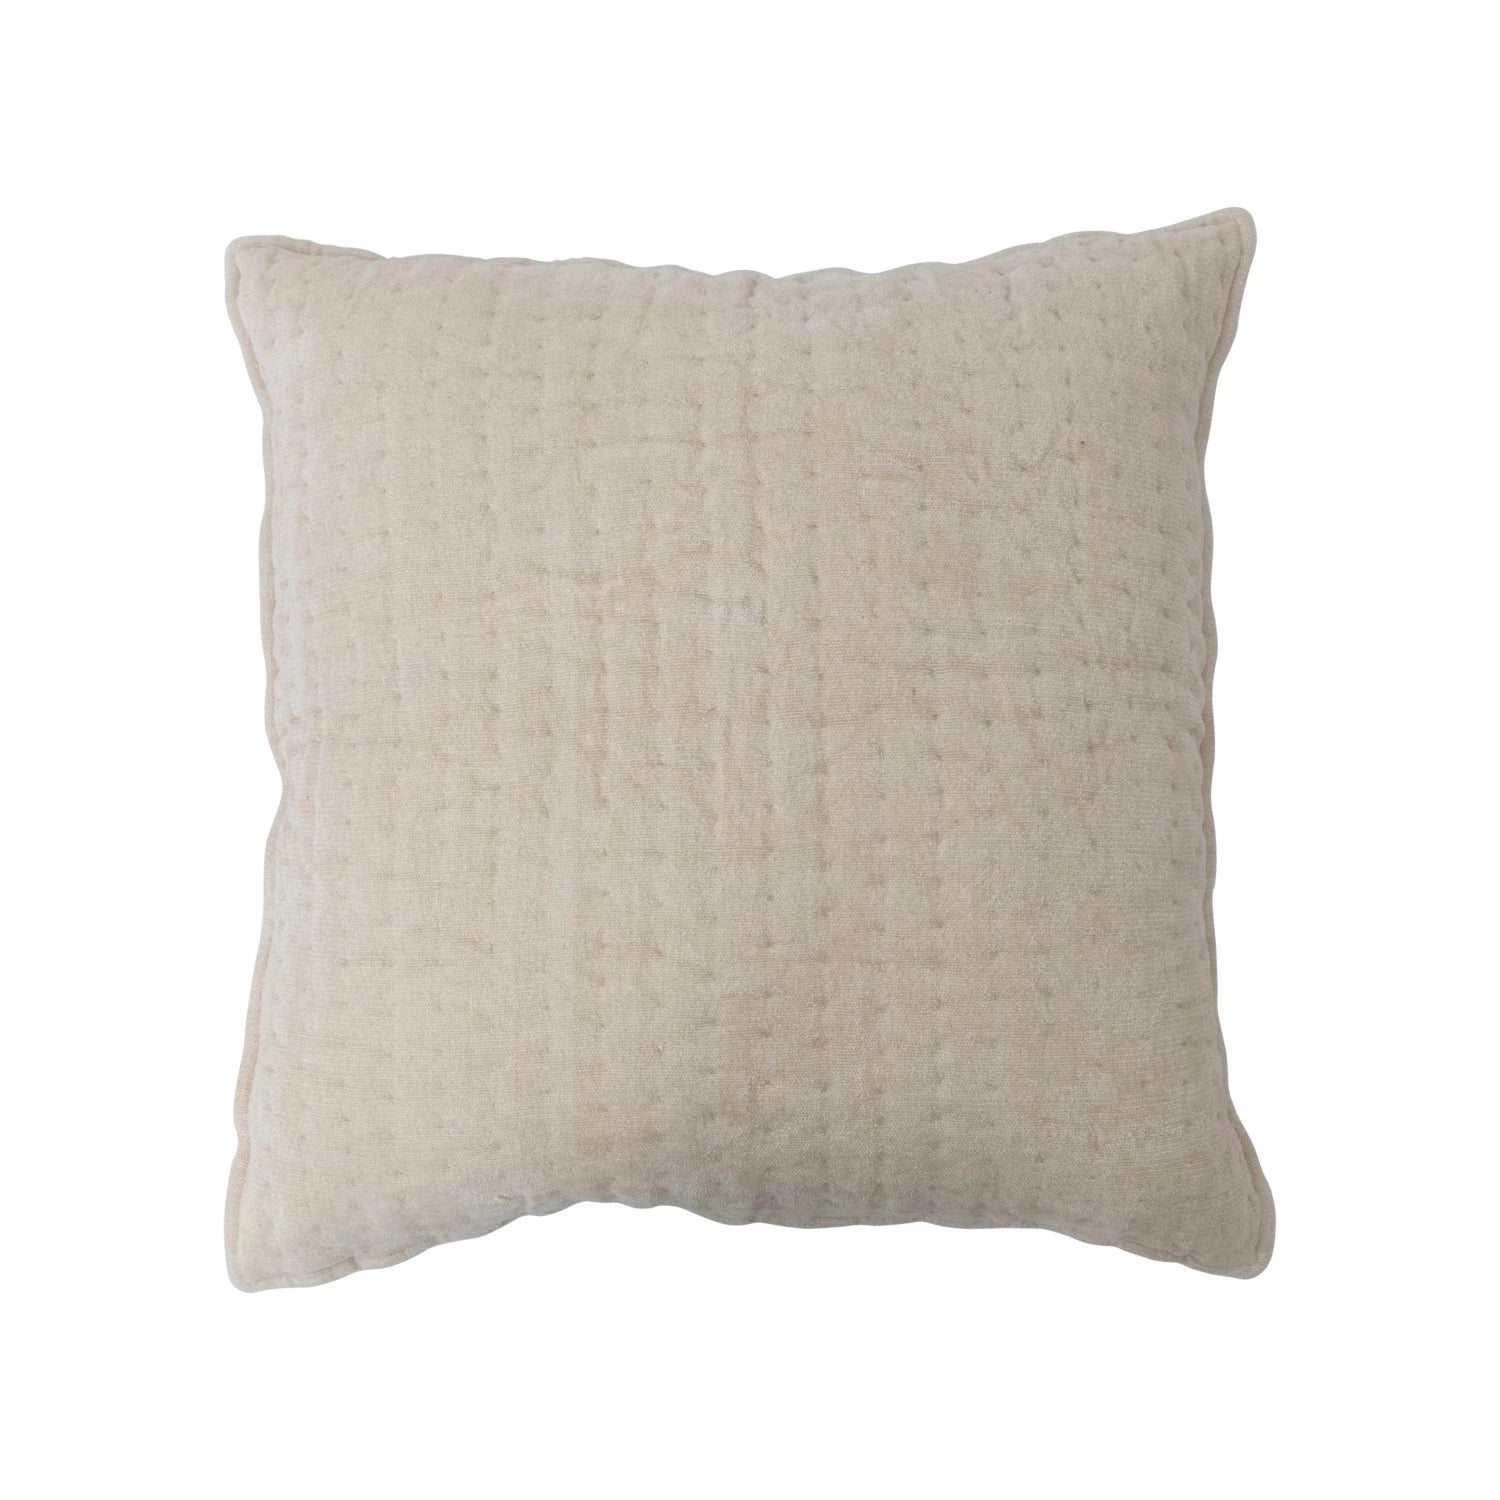 Cream Kantha Stitch Chenille Pillow*